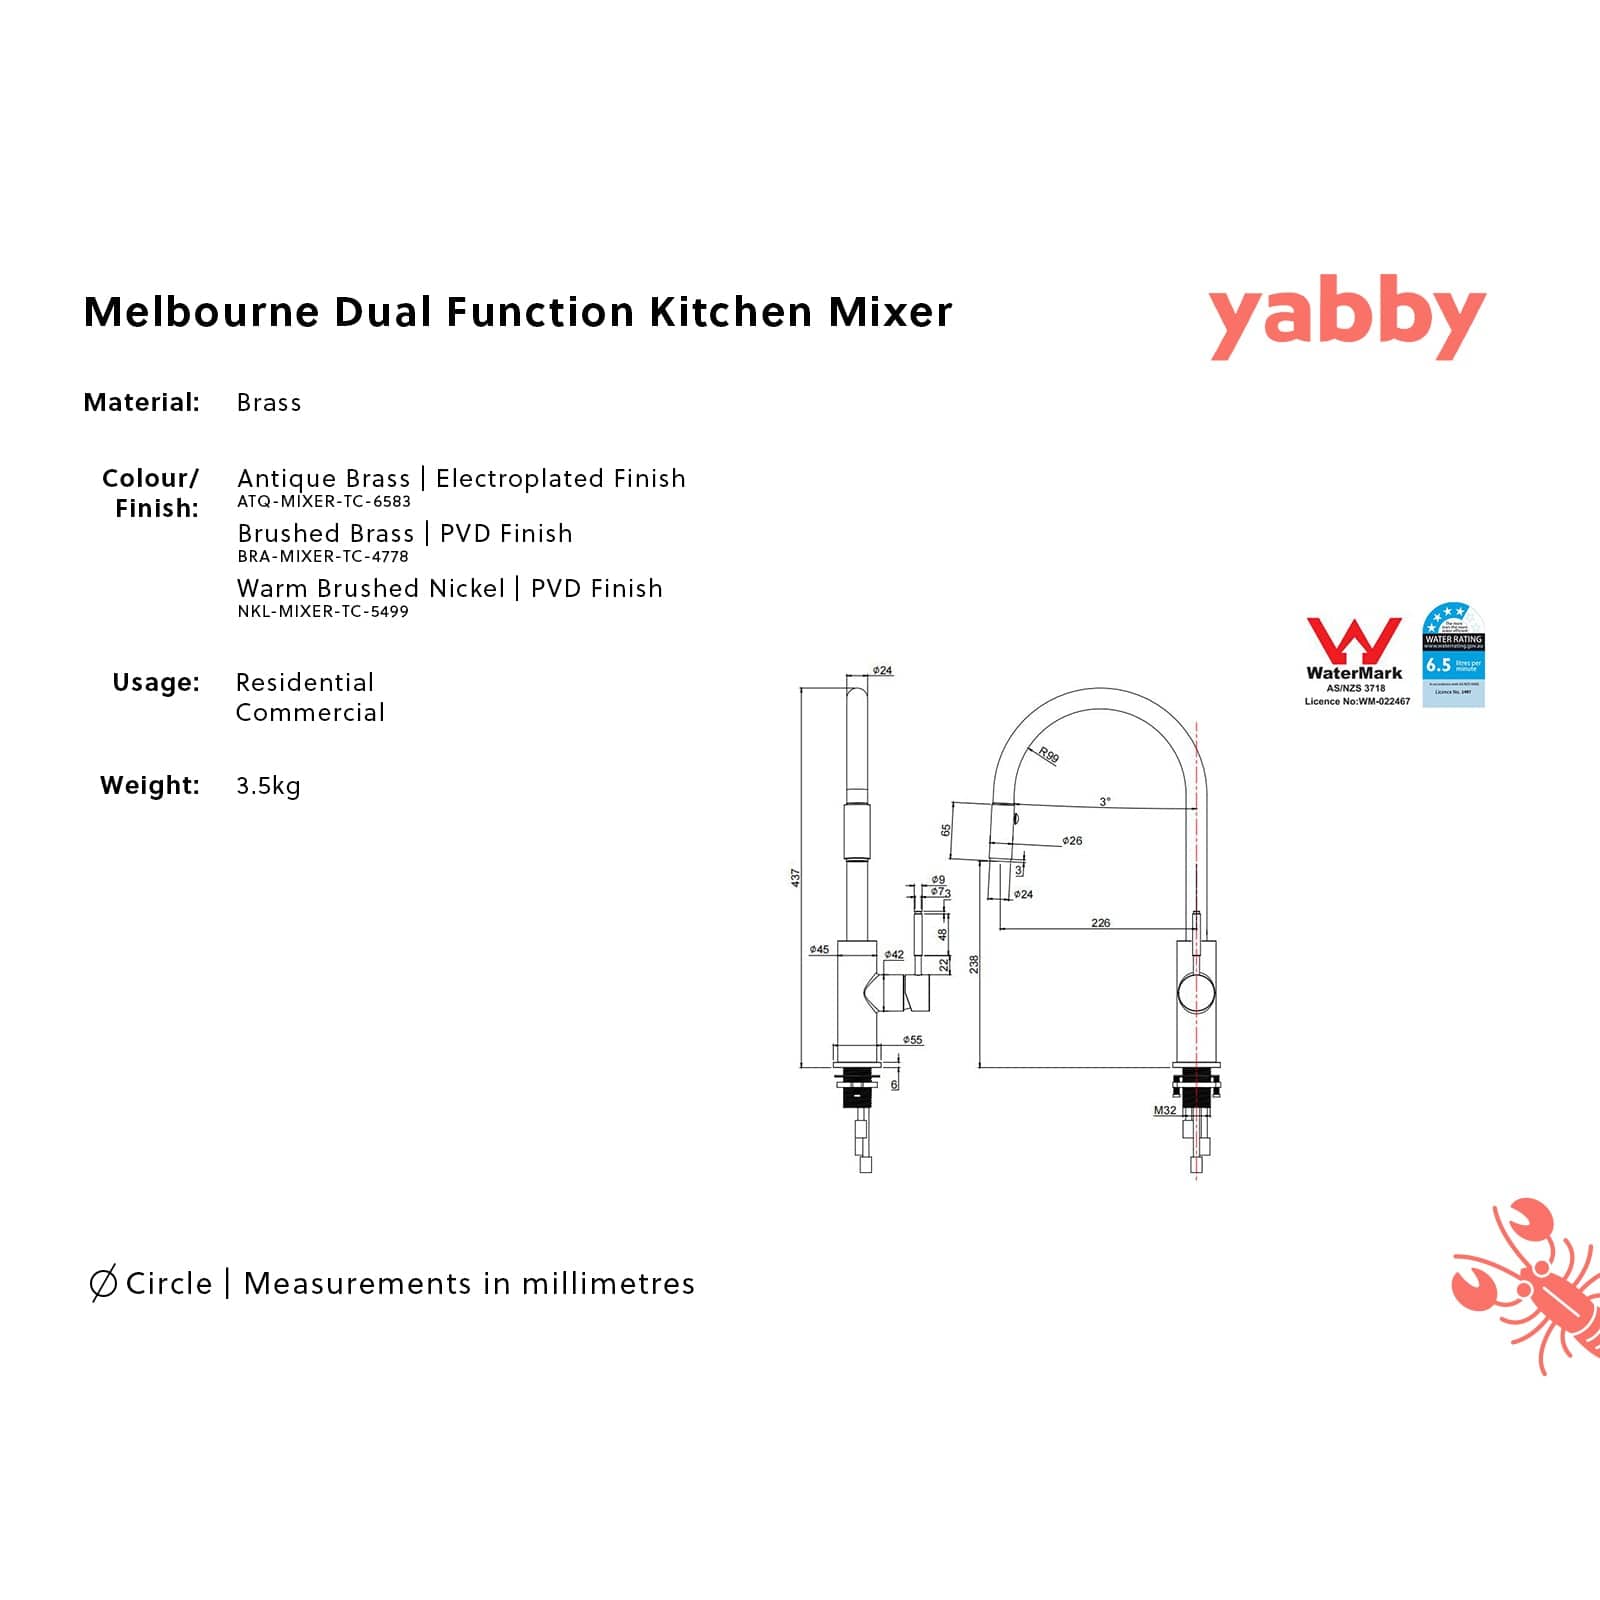 TileCloud TAPWARE Melbourne Dual Function Kitchen Mixer Brushed Brass